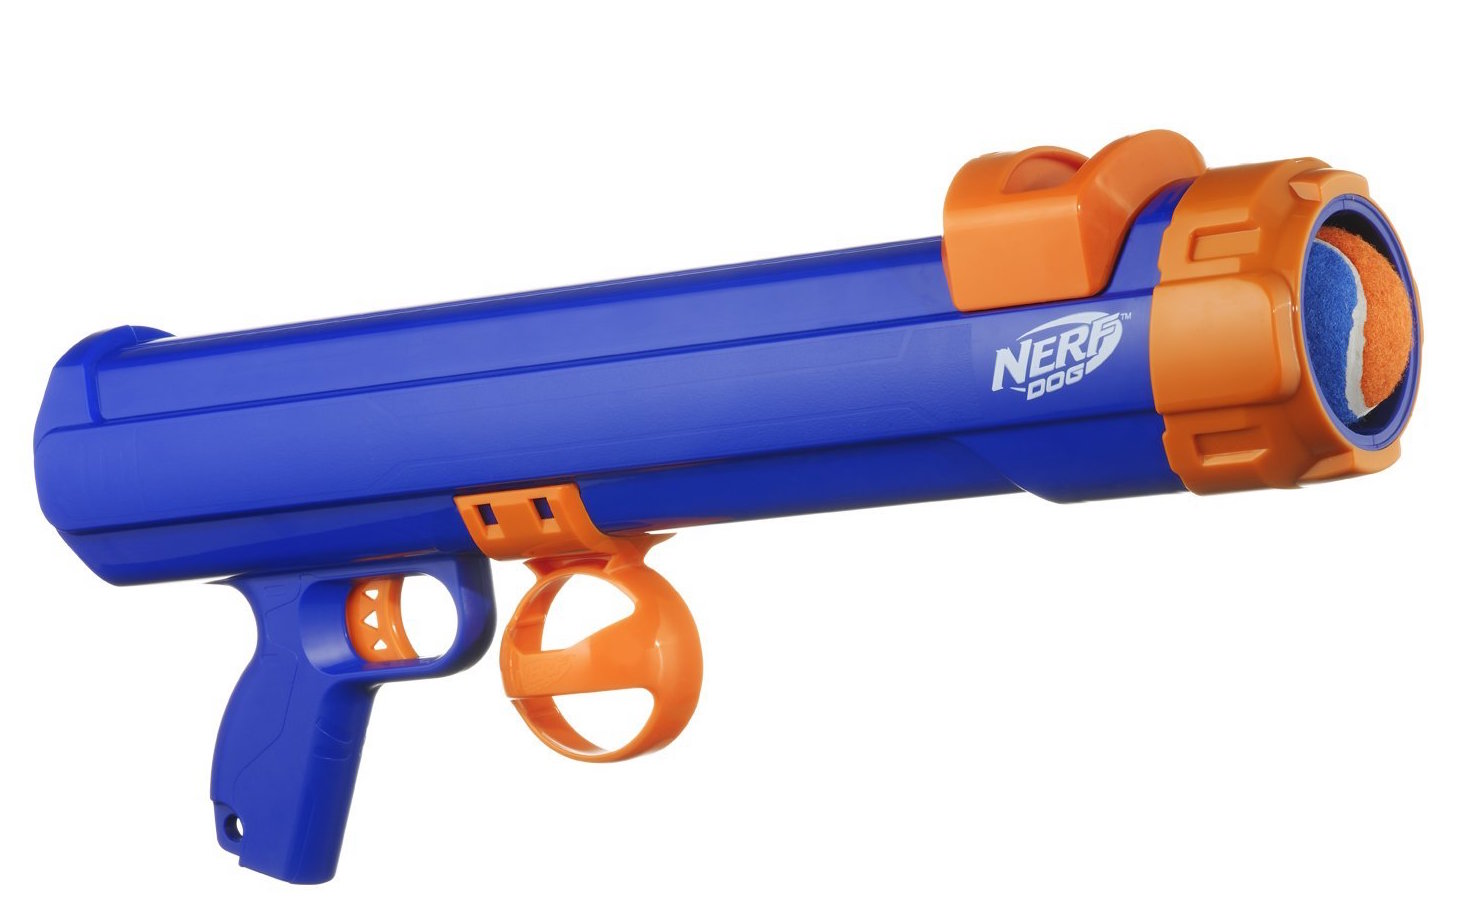 nerf tennis ball gun for dogs